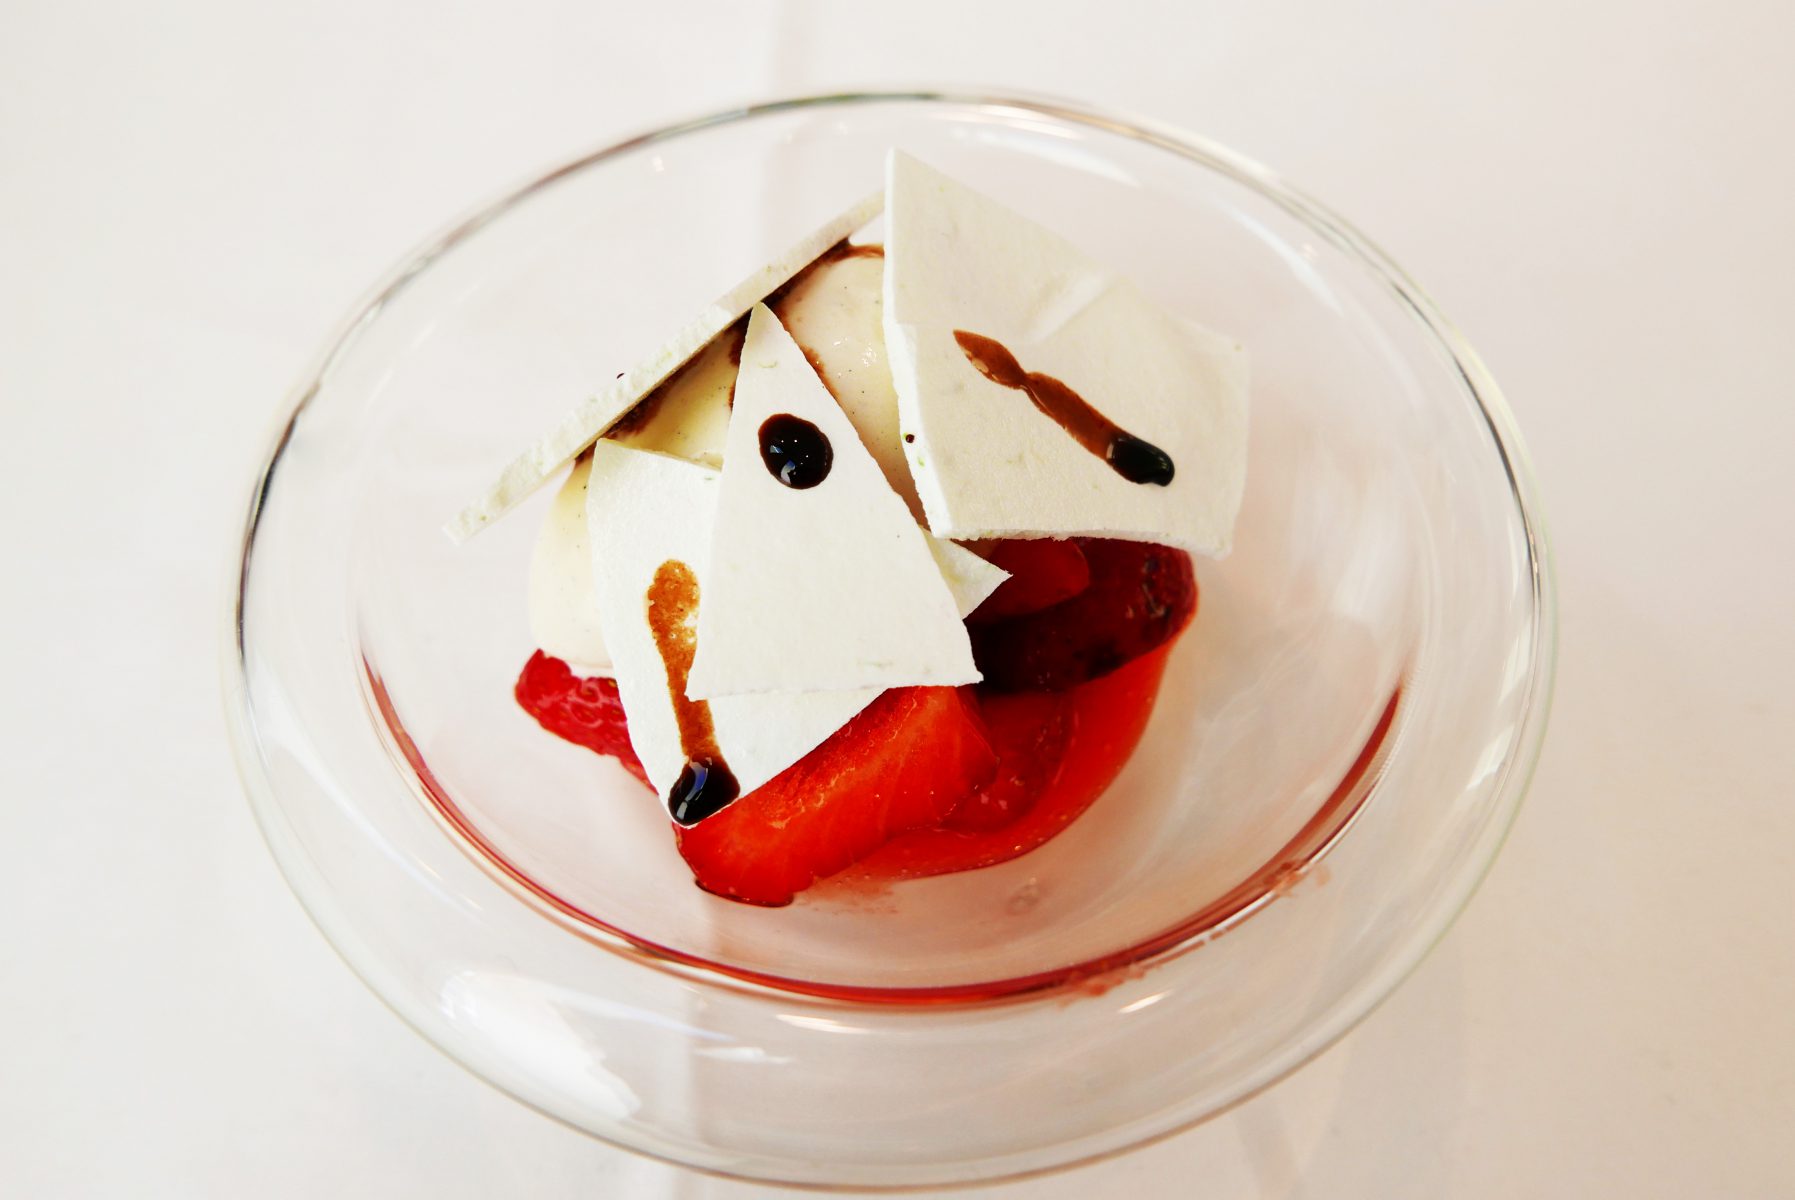 Gariguette strawberries with lime meringue, Tahitian vanilla ice cream and 15 year old balsamic vinegar